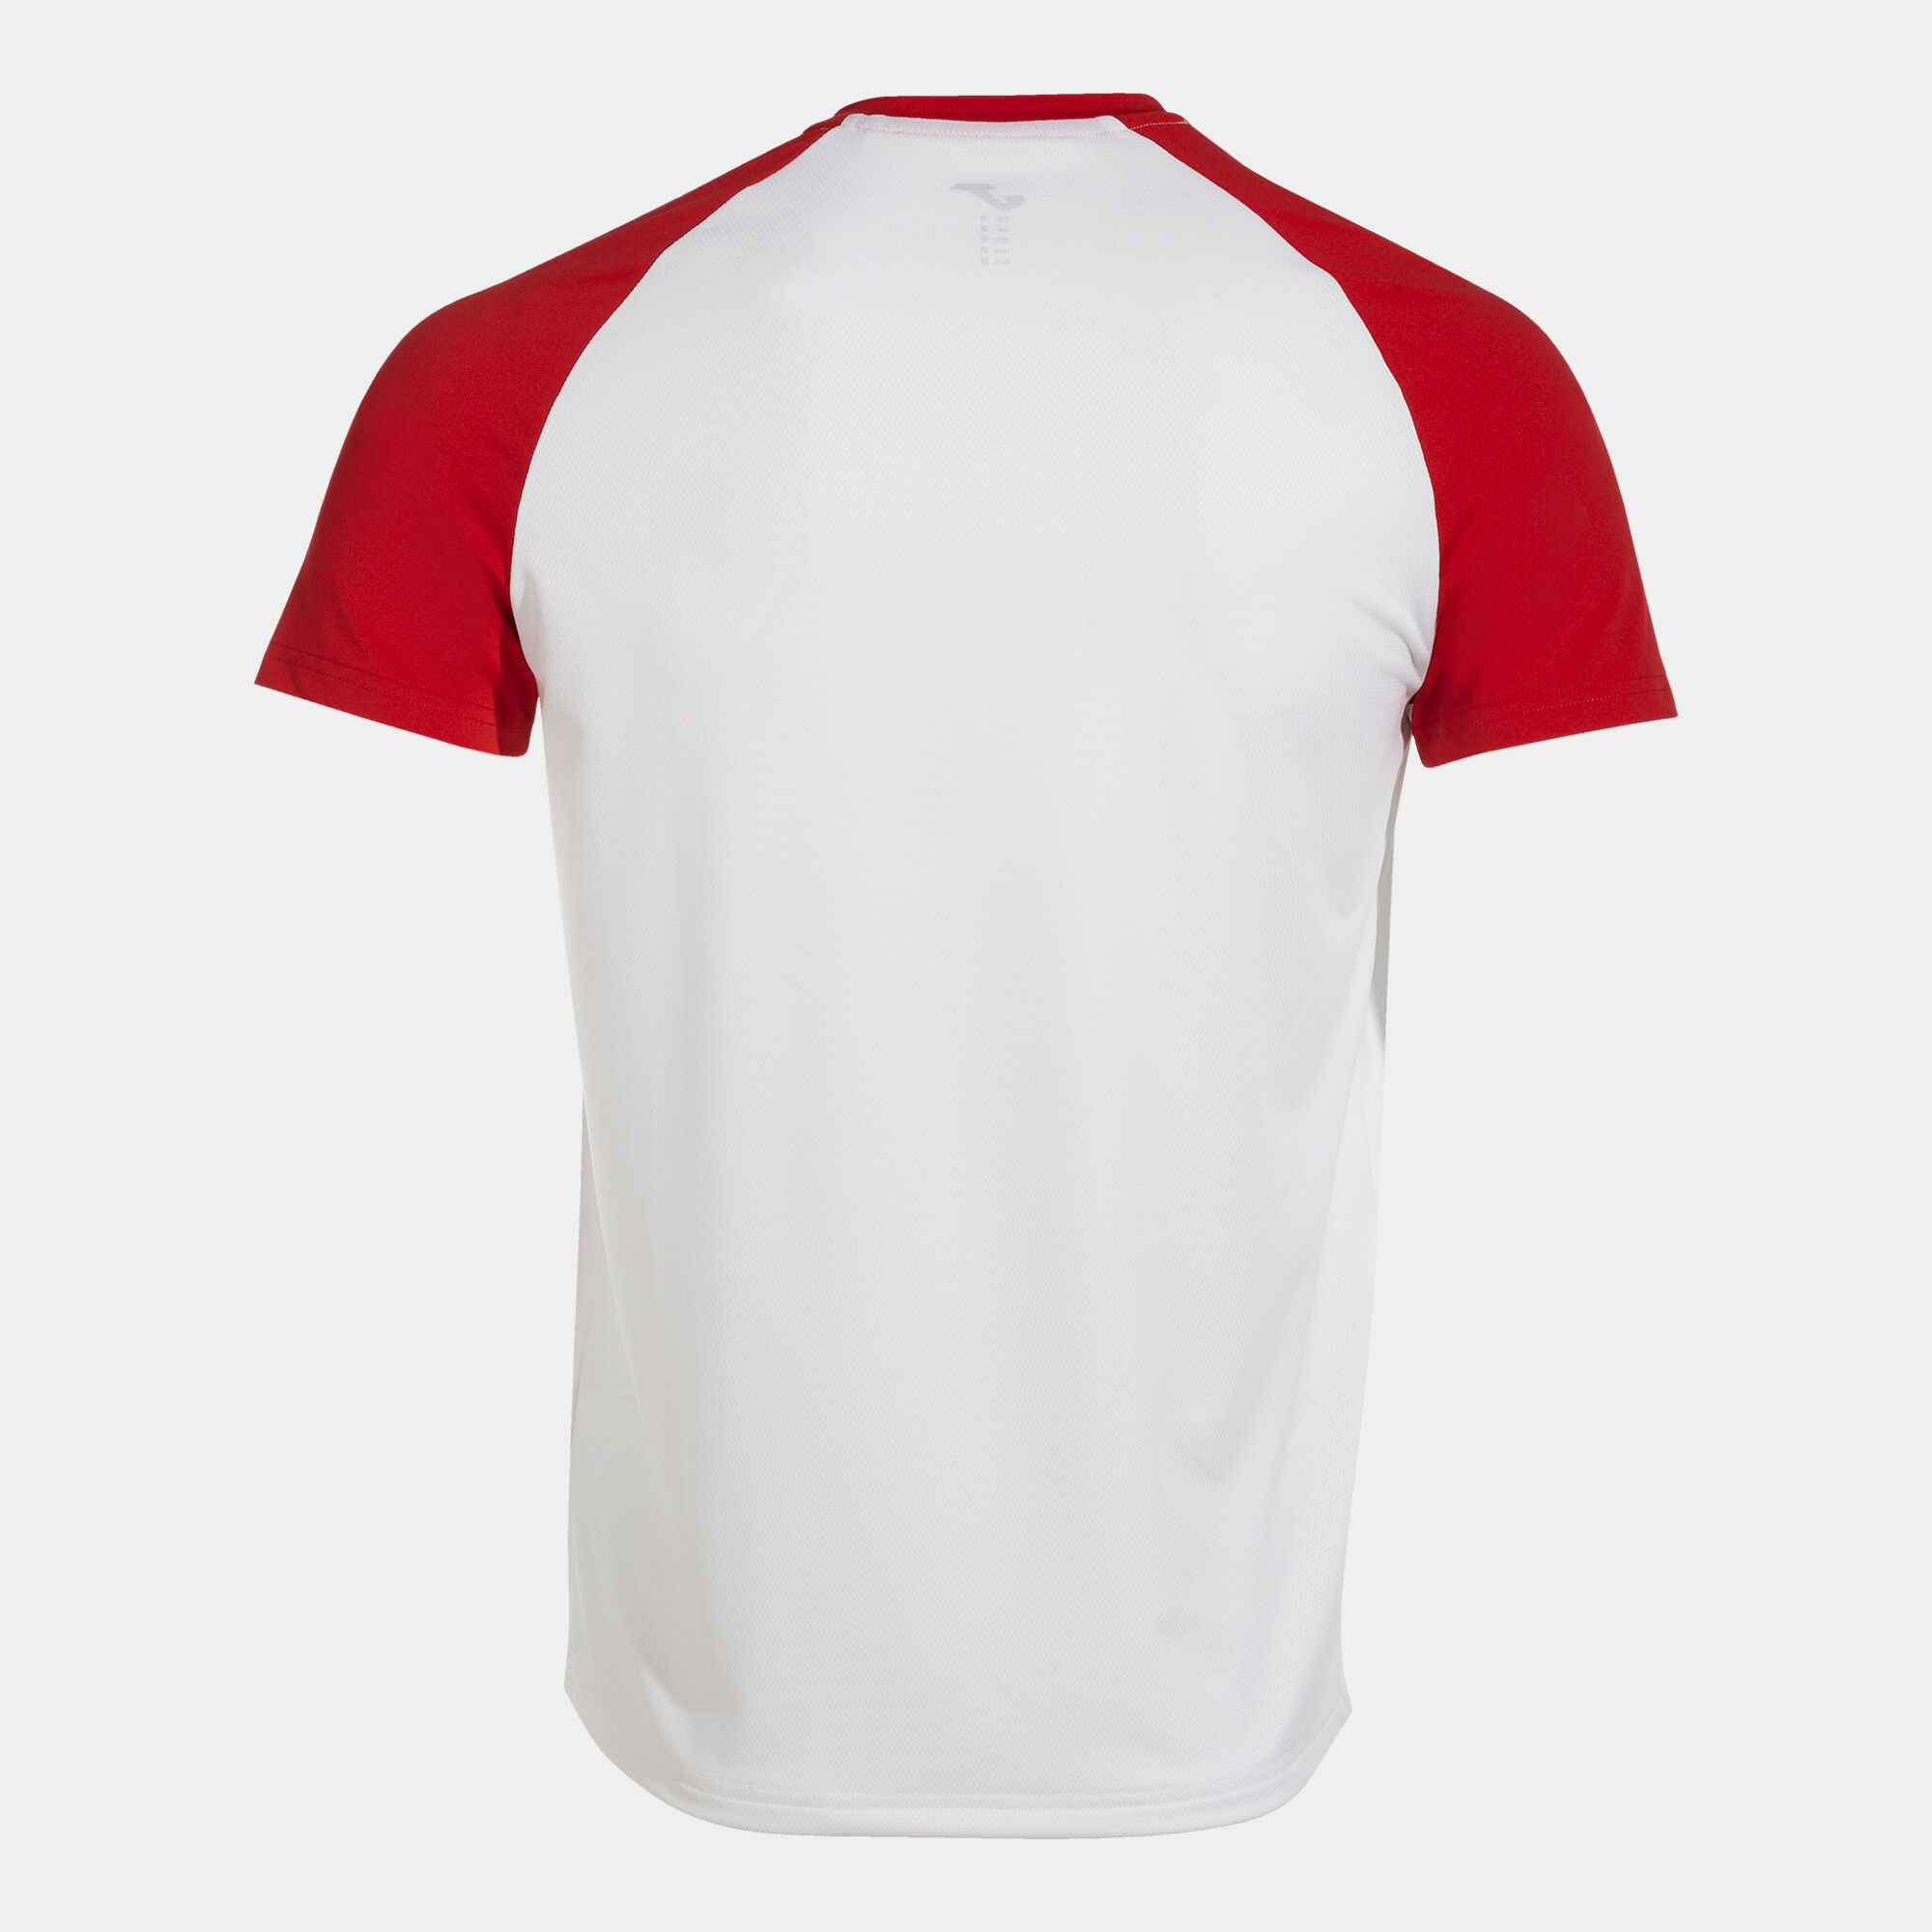 Camiseta manga corta hombre Elite X blanco rojo